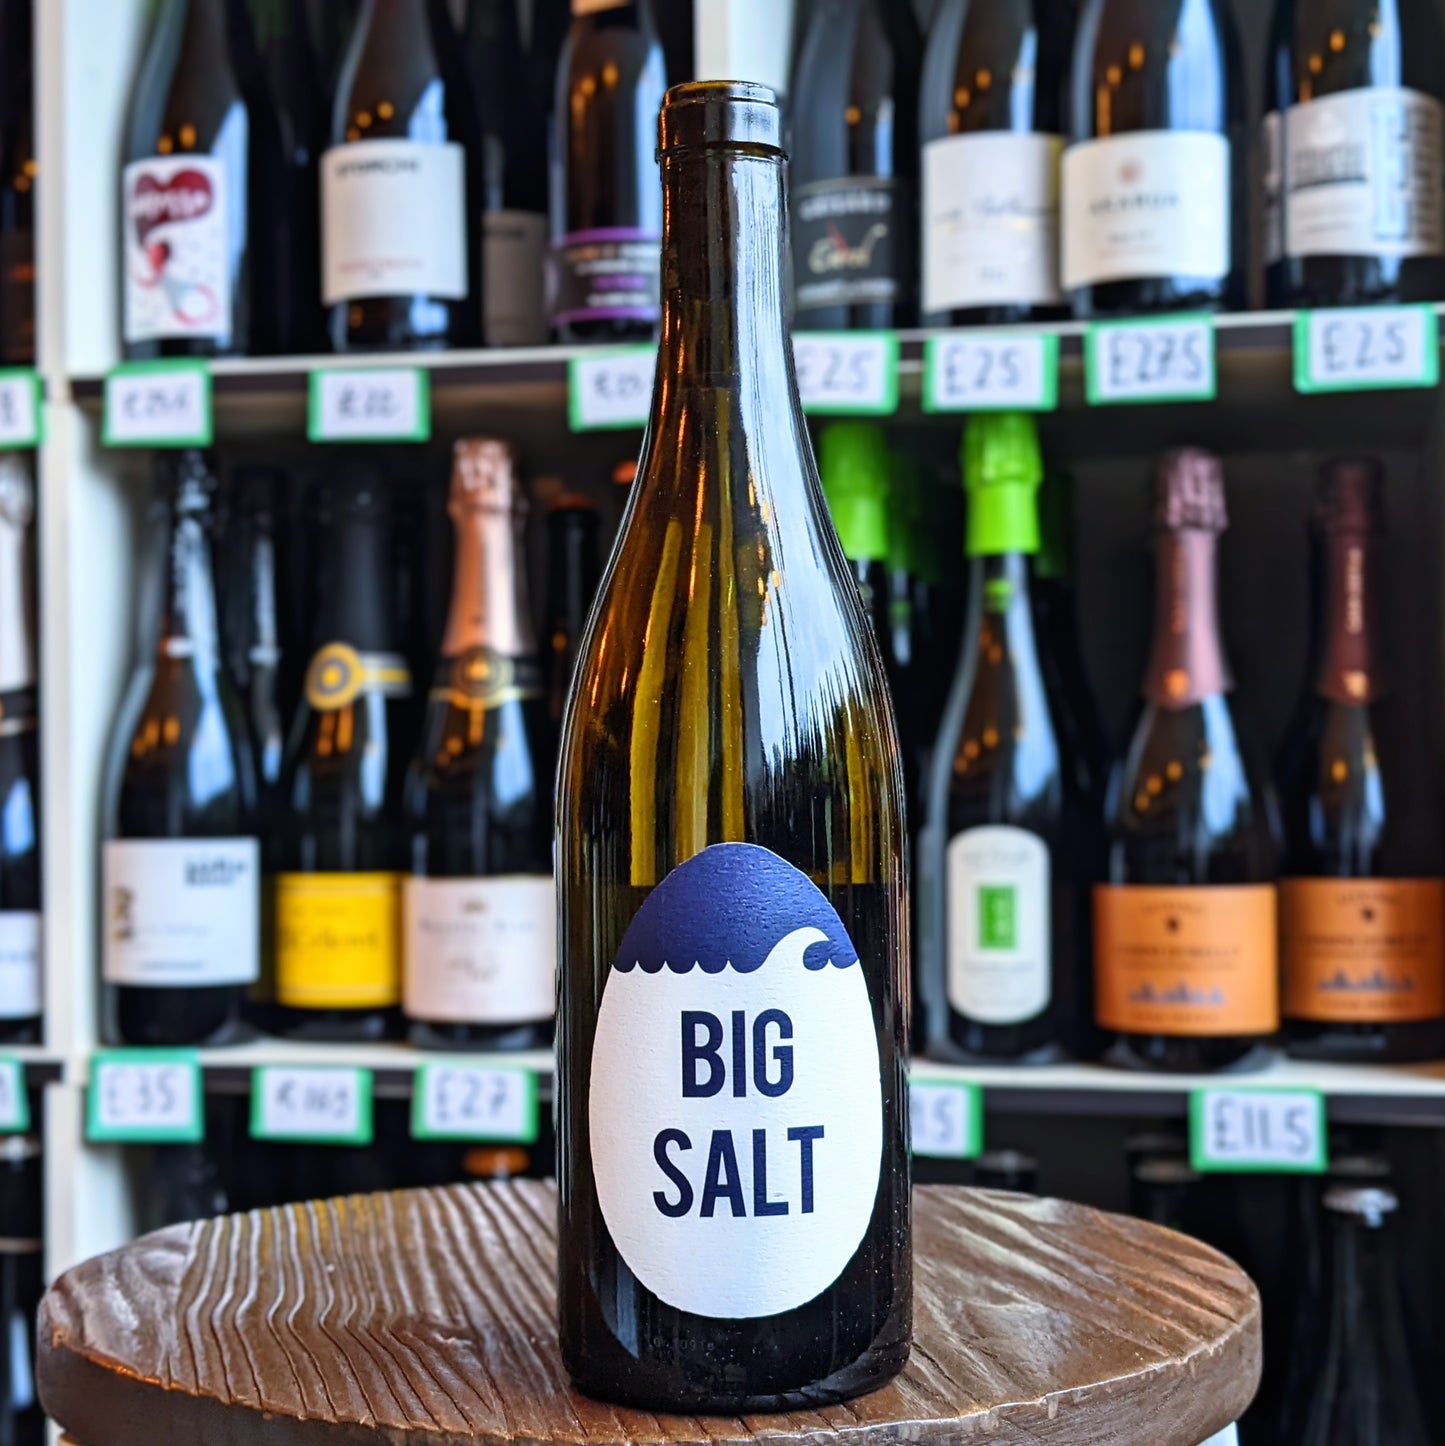 Ovum Wines, Big Salt, Riesling / Gewurztraminer / Muscat, Oregon, USA